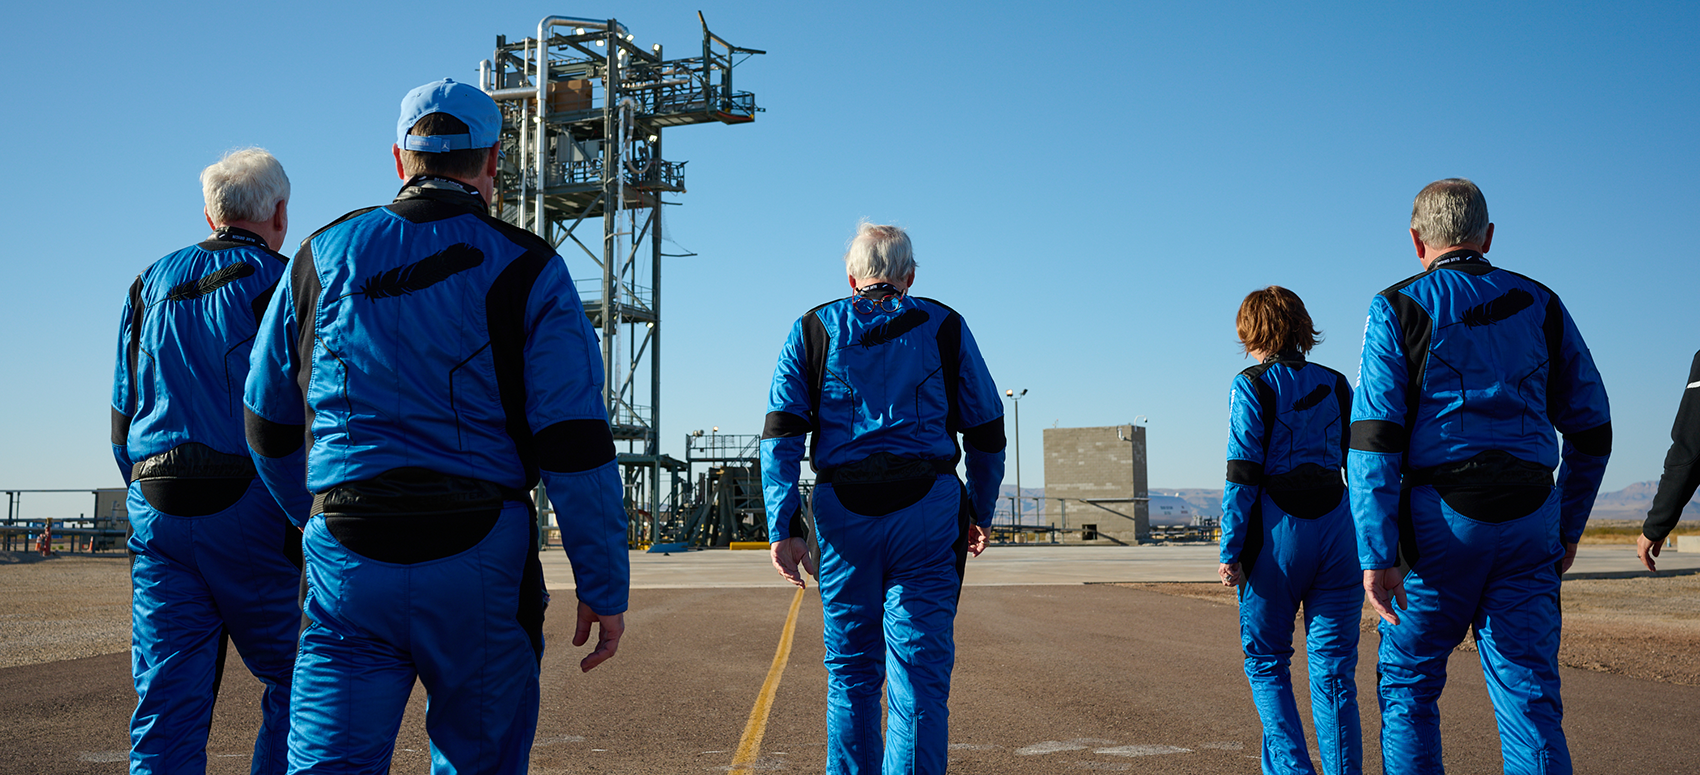 AIAA Statement on Blue Origin’s Successful NS-20 Mission